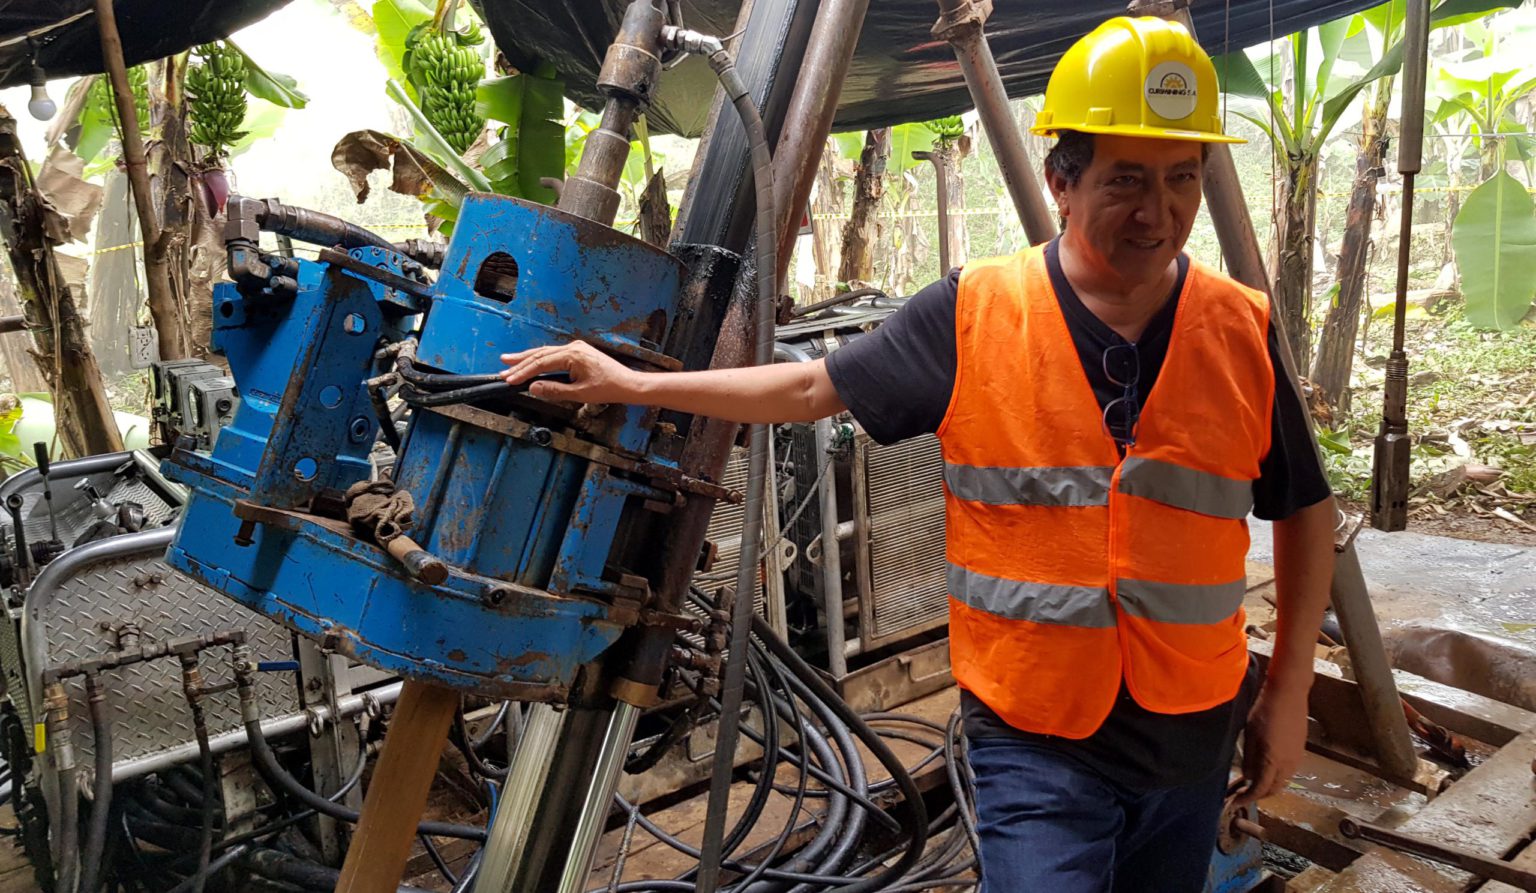 Adventus, Salazar secure $235 million to advance Curipamba copper project